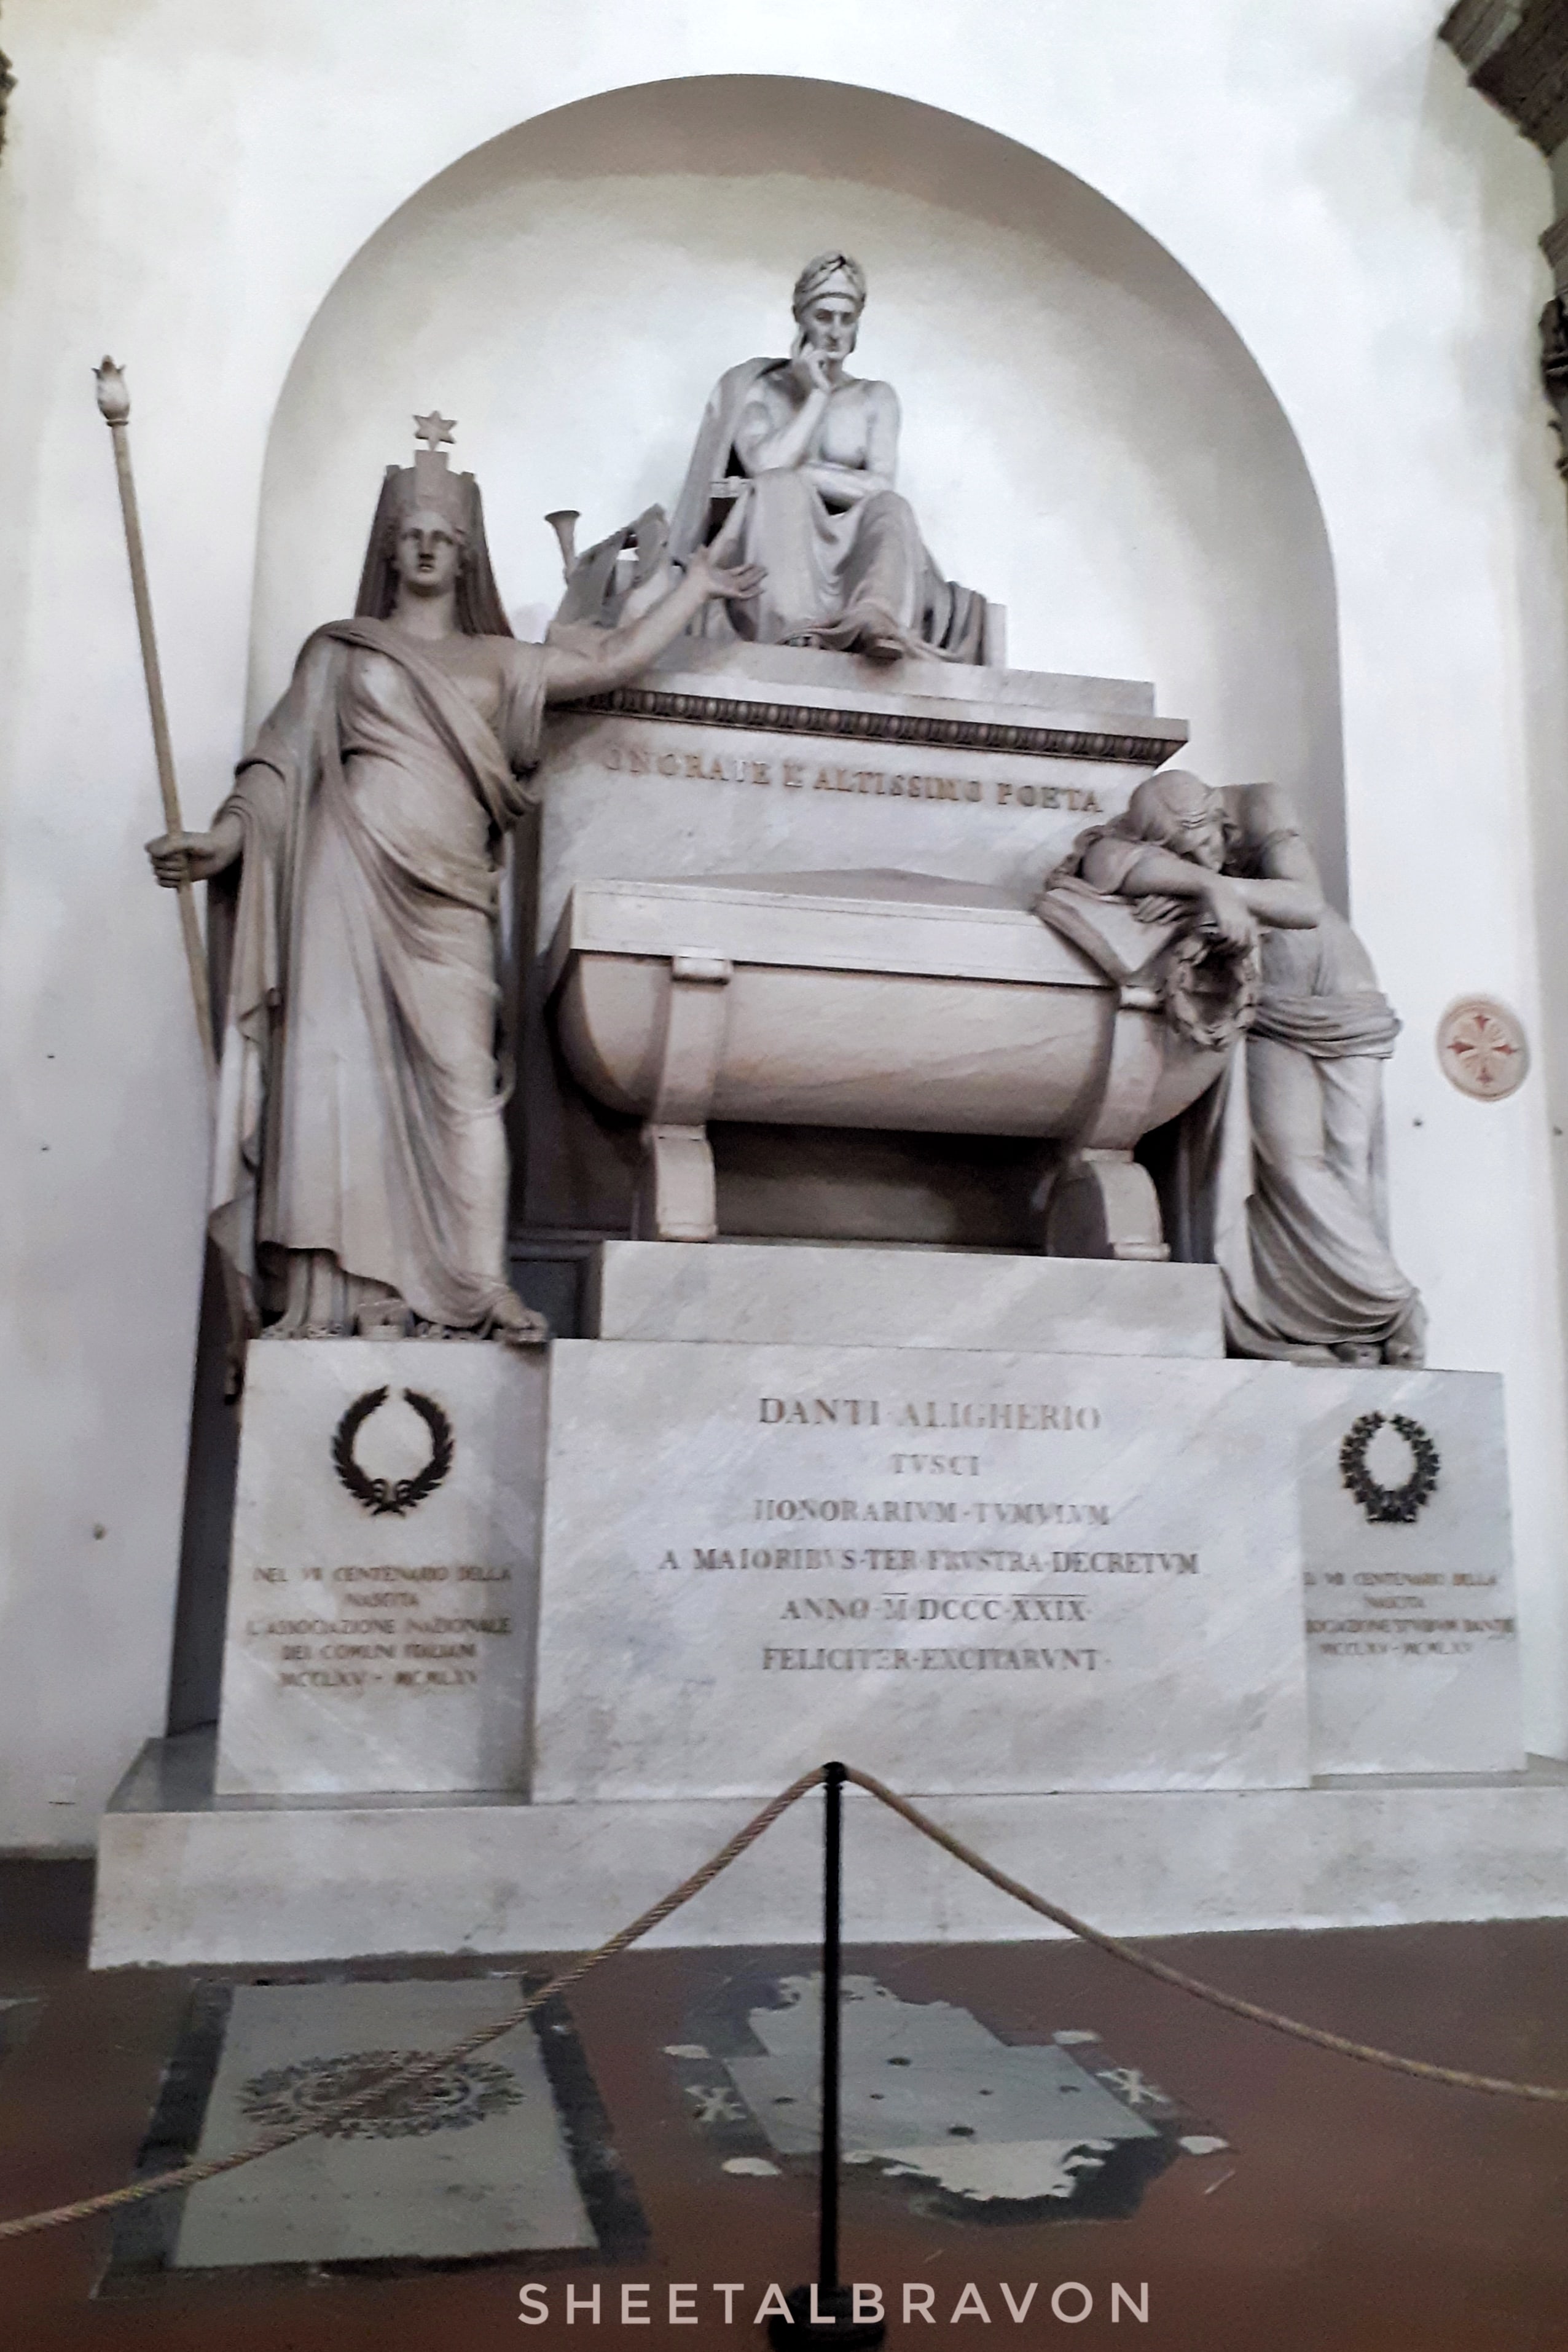 Dante's tomb in Basilica of Santa Croce in Florence 